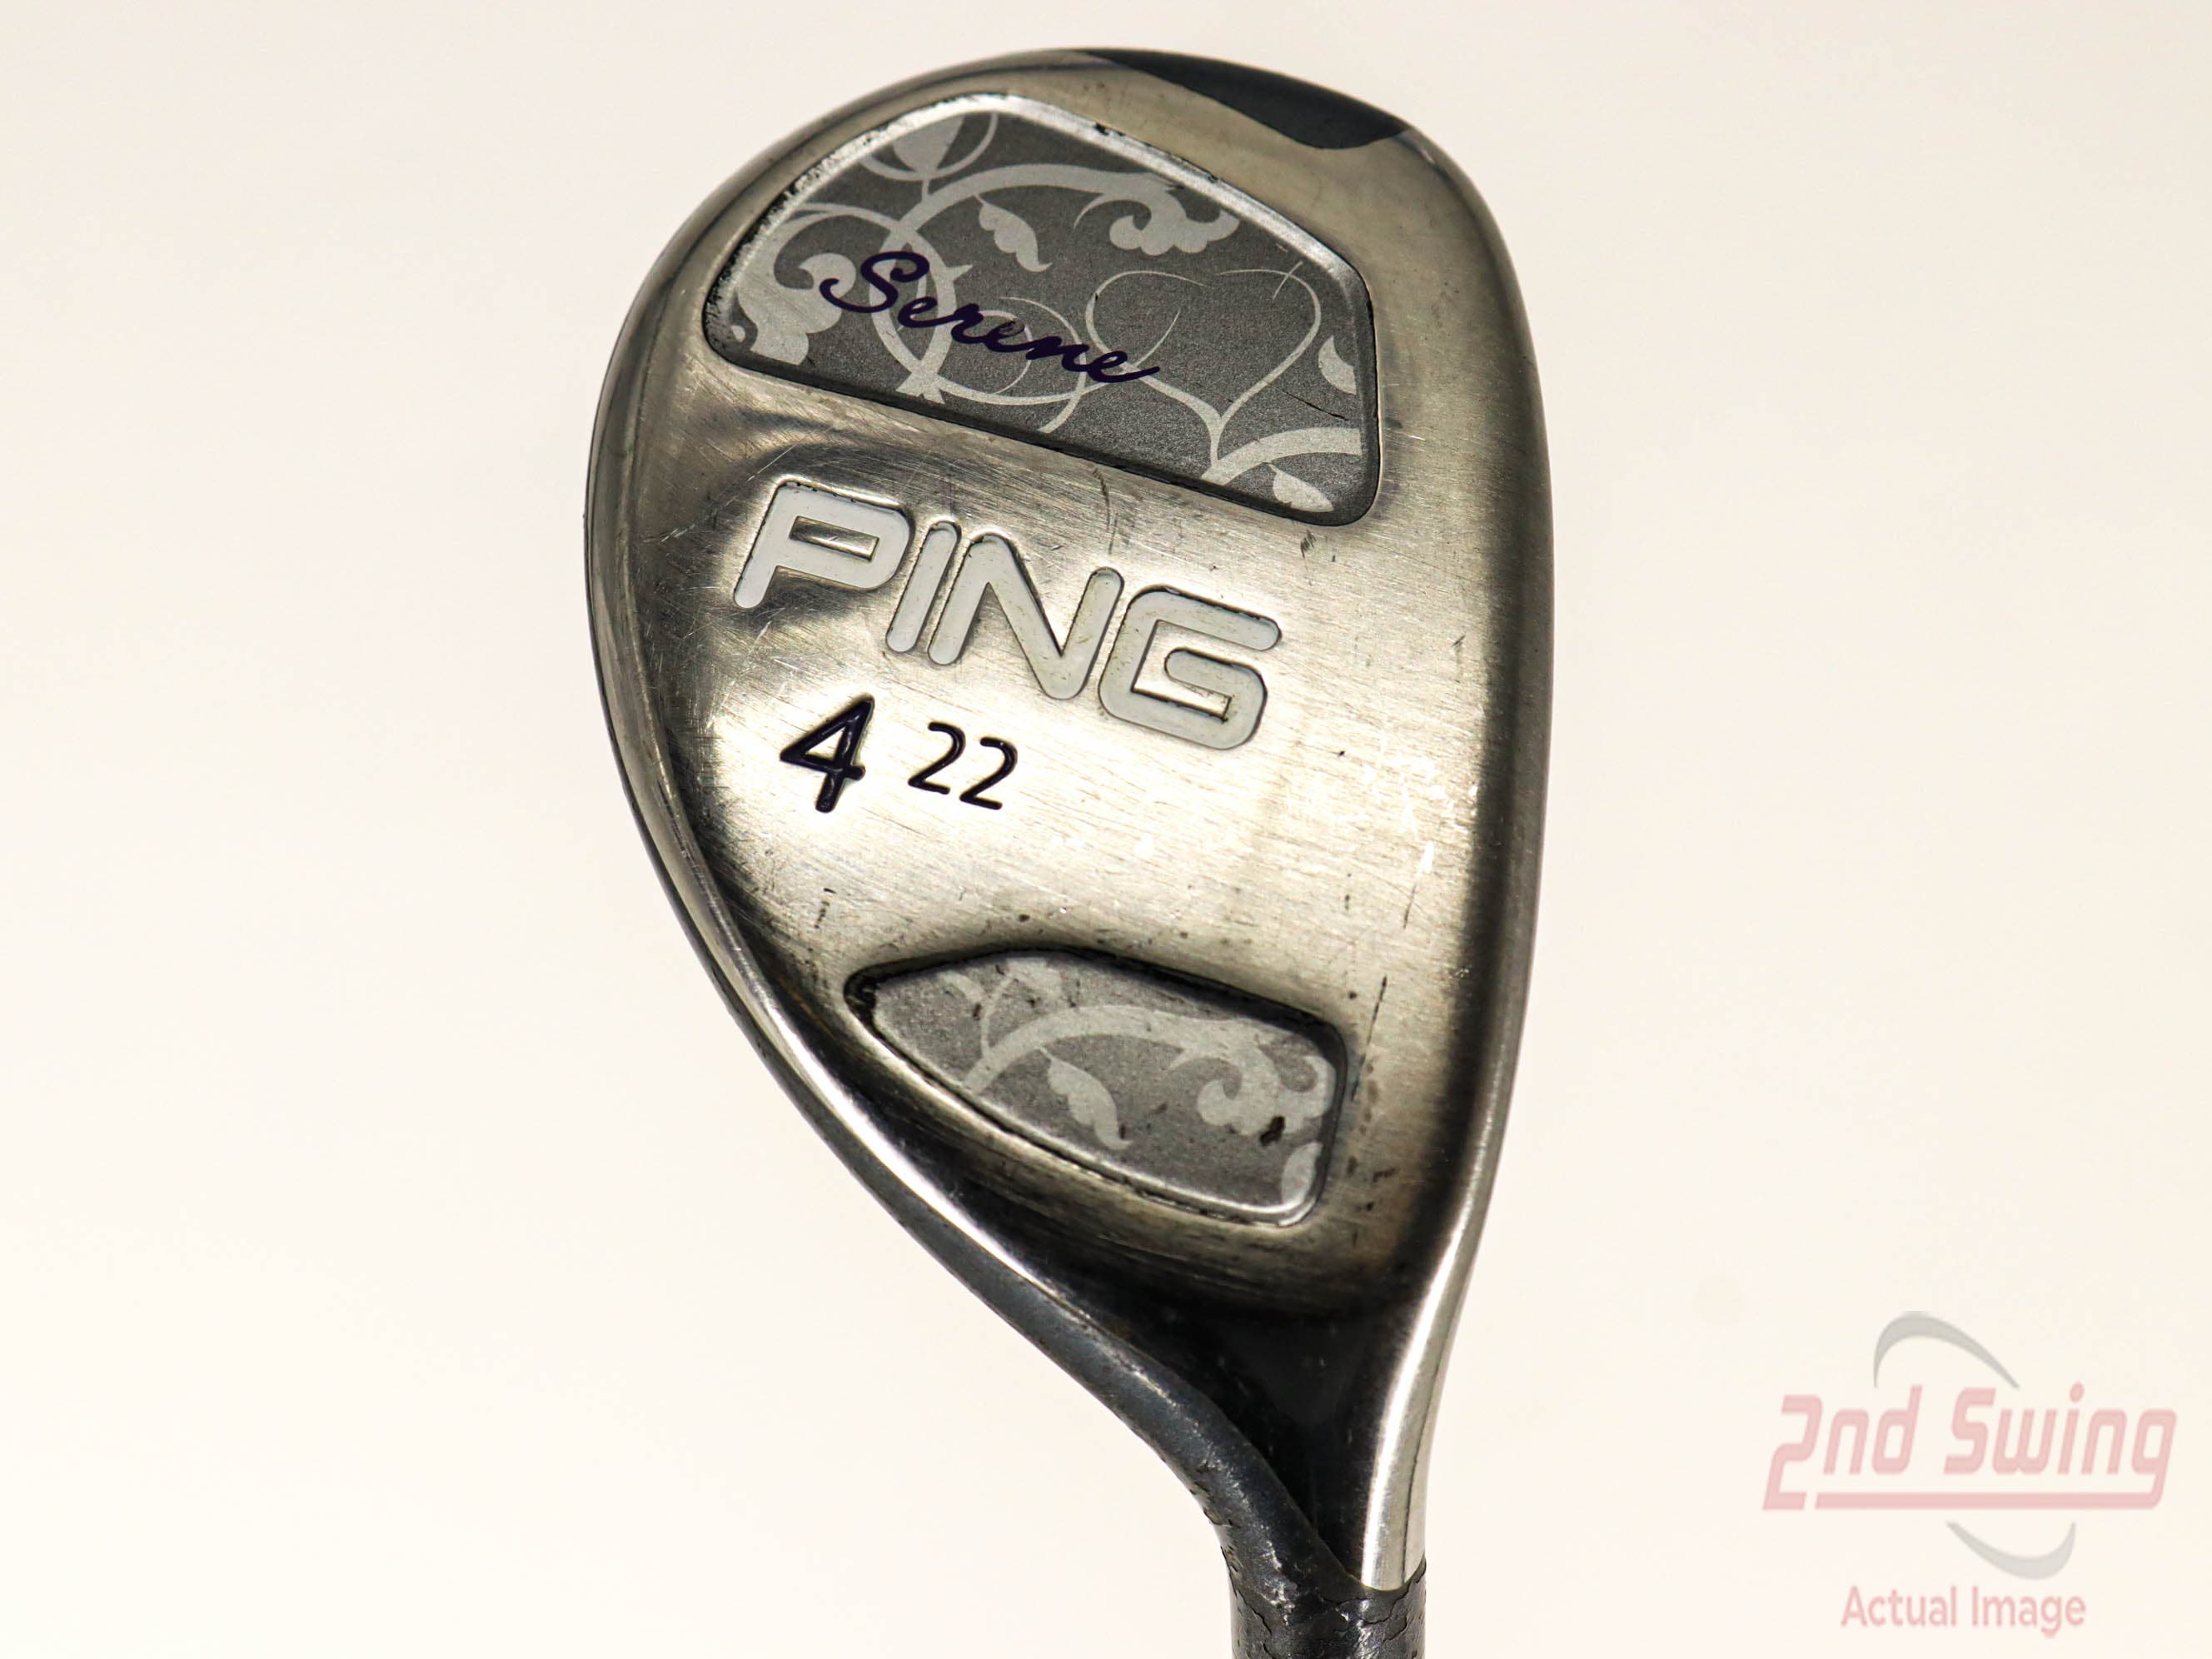 Ping Serene Hybrid | 2nd Swing Golf